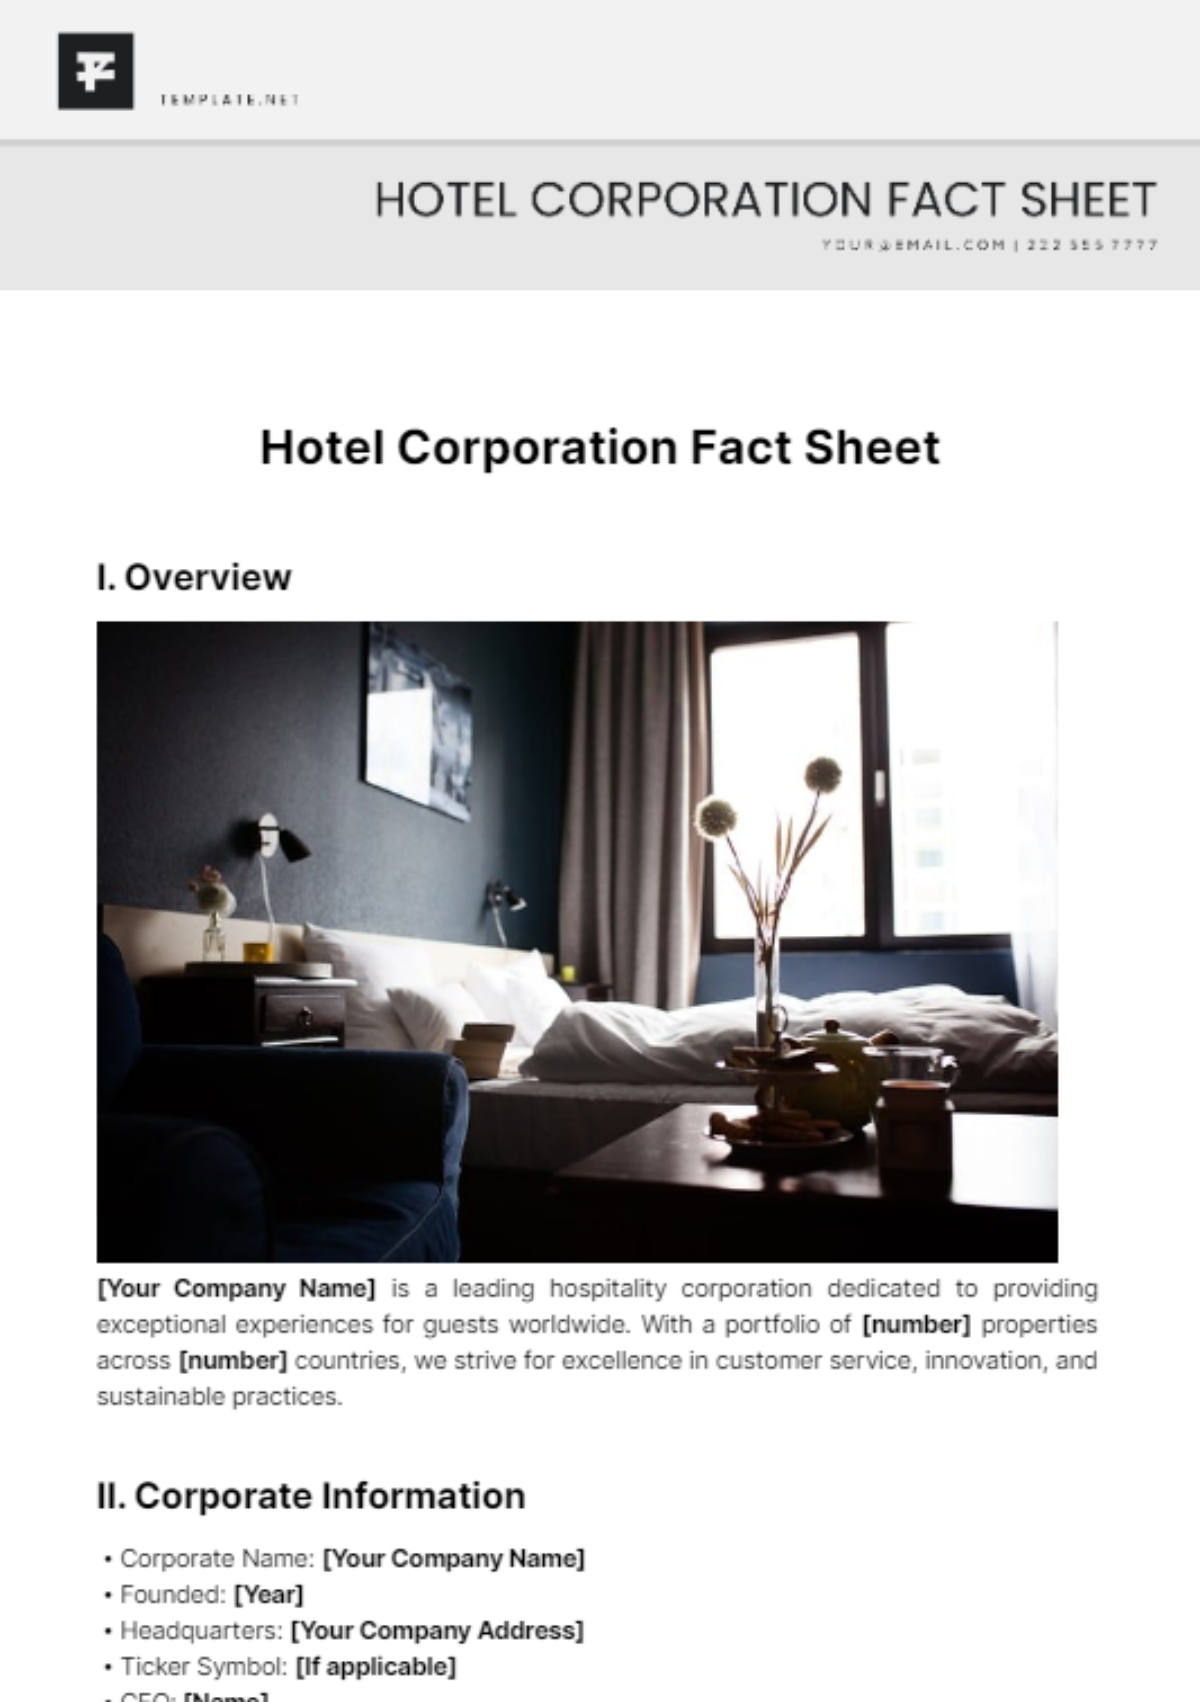 Hotel Corporation Fact Sheet Template